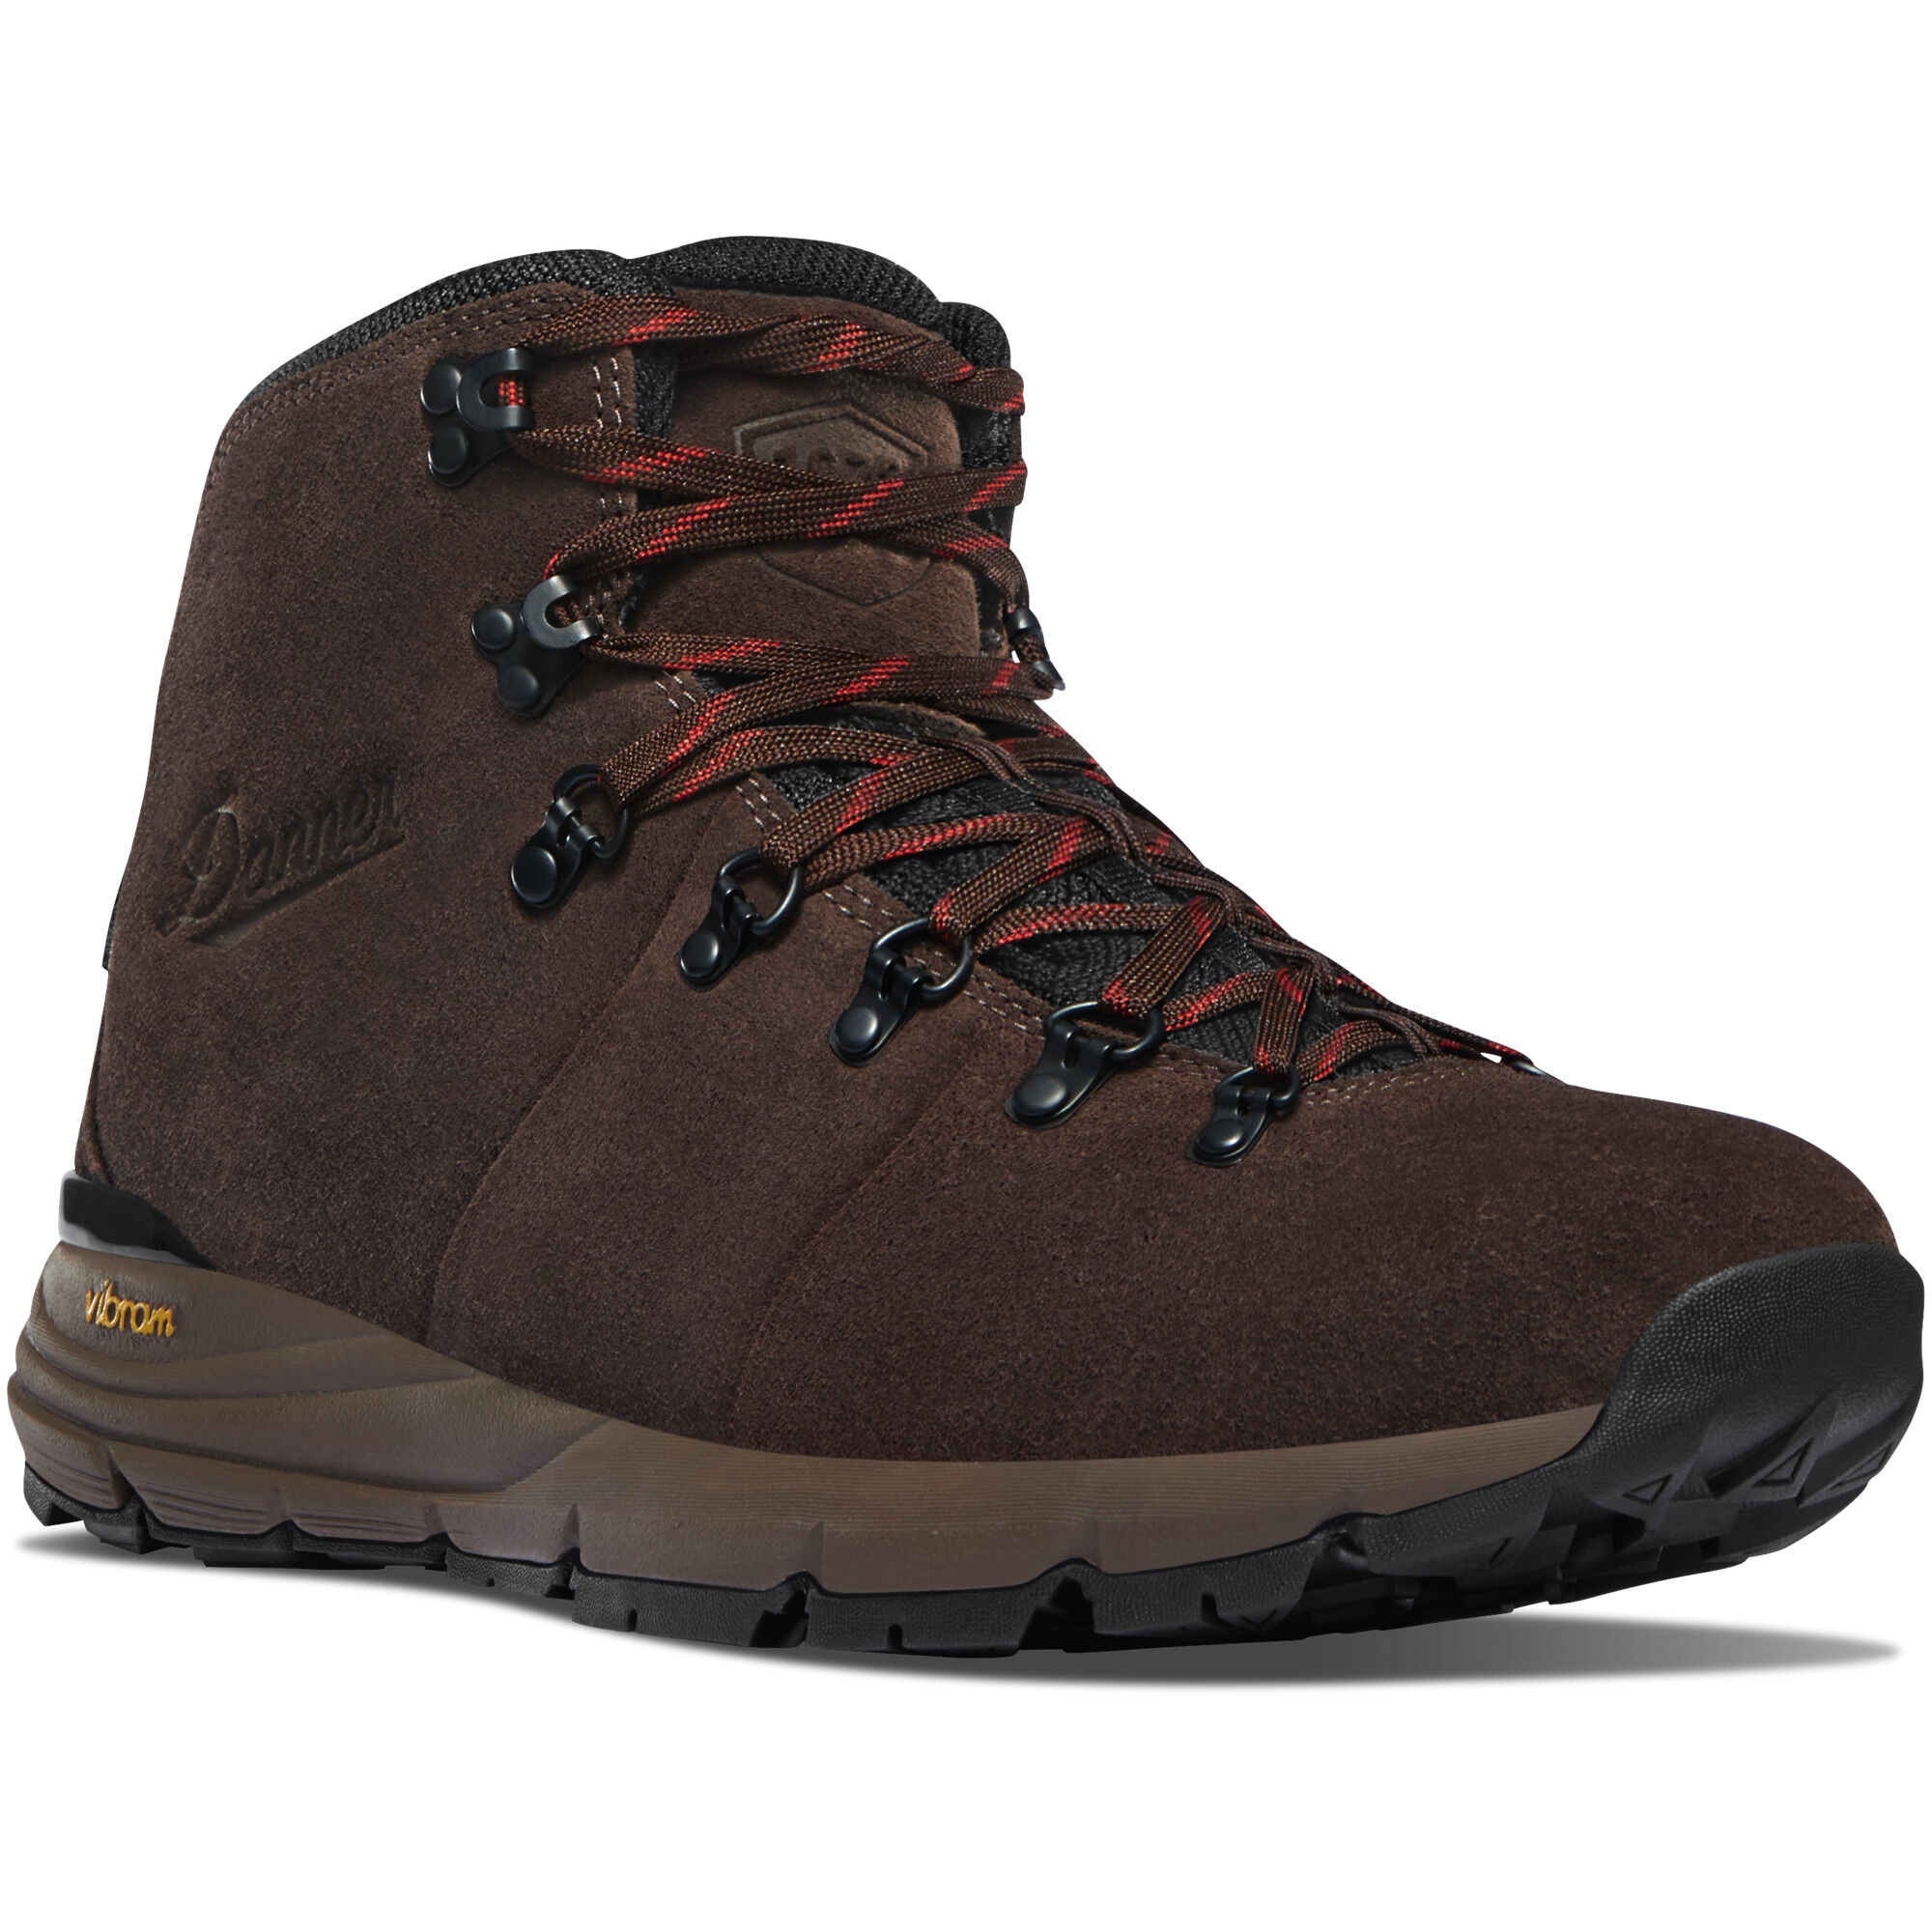 Danner Mountain 600 - Hiking boots - Men's